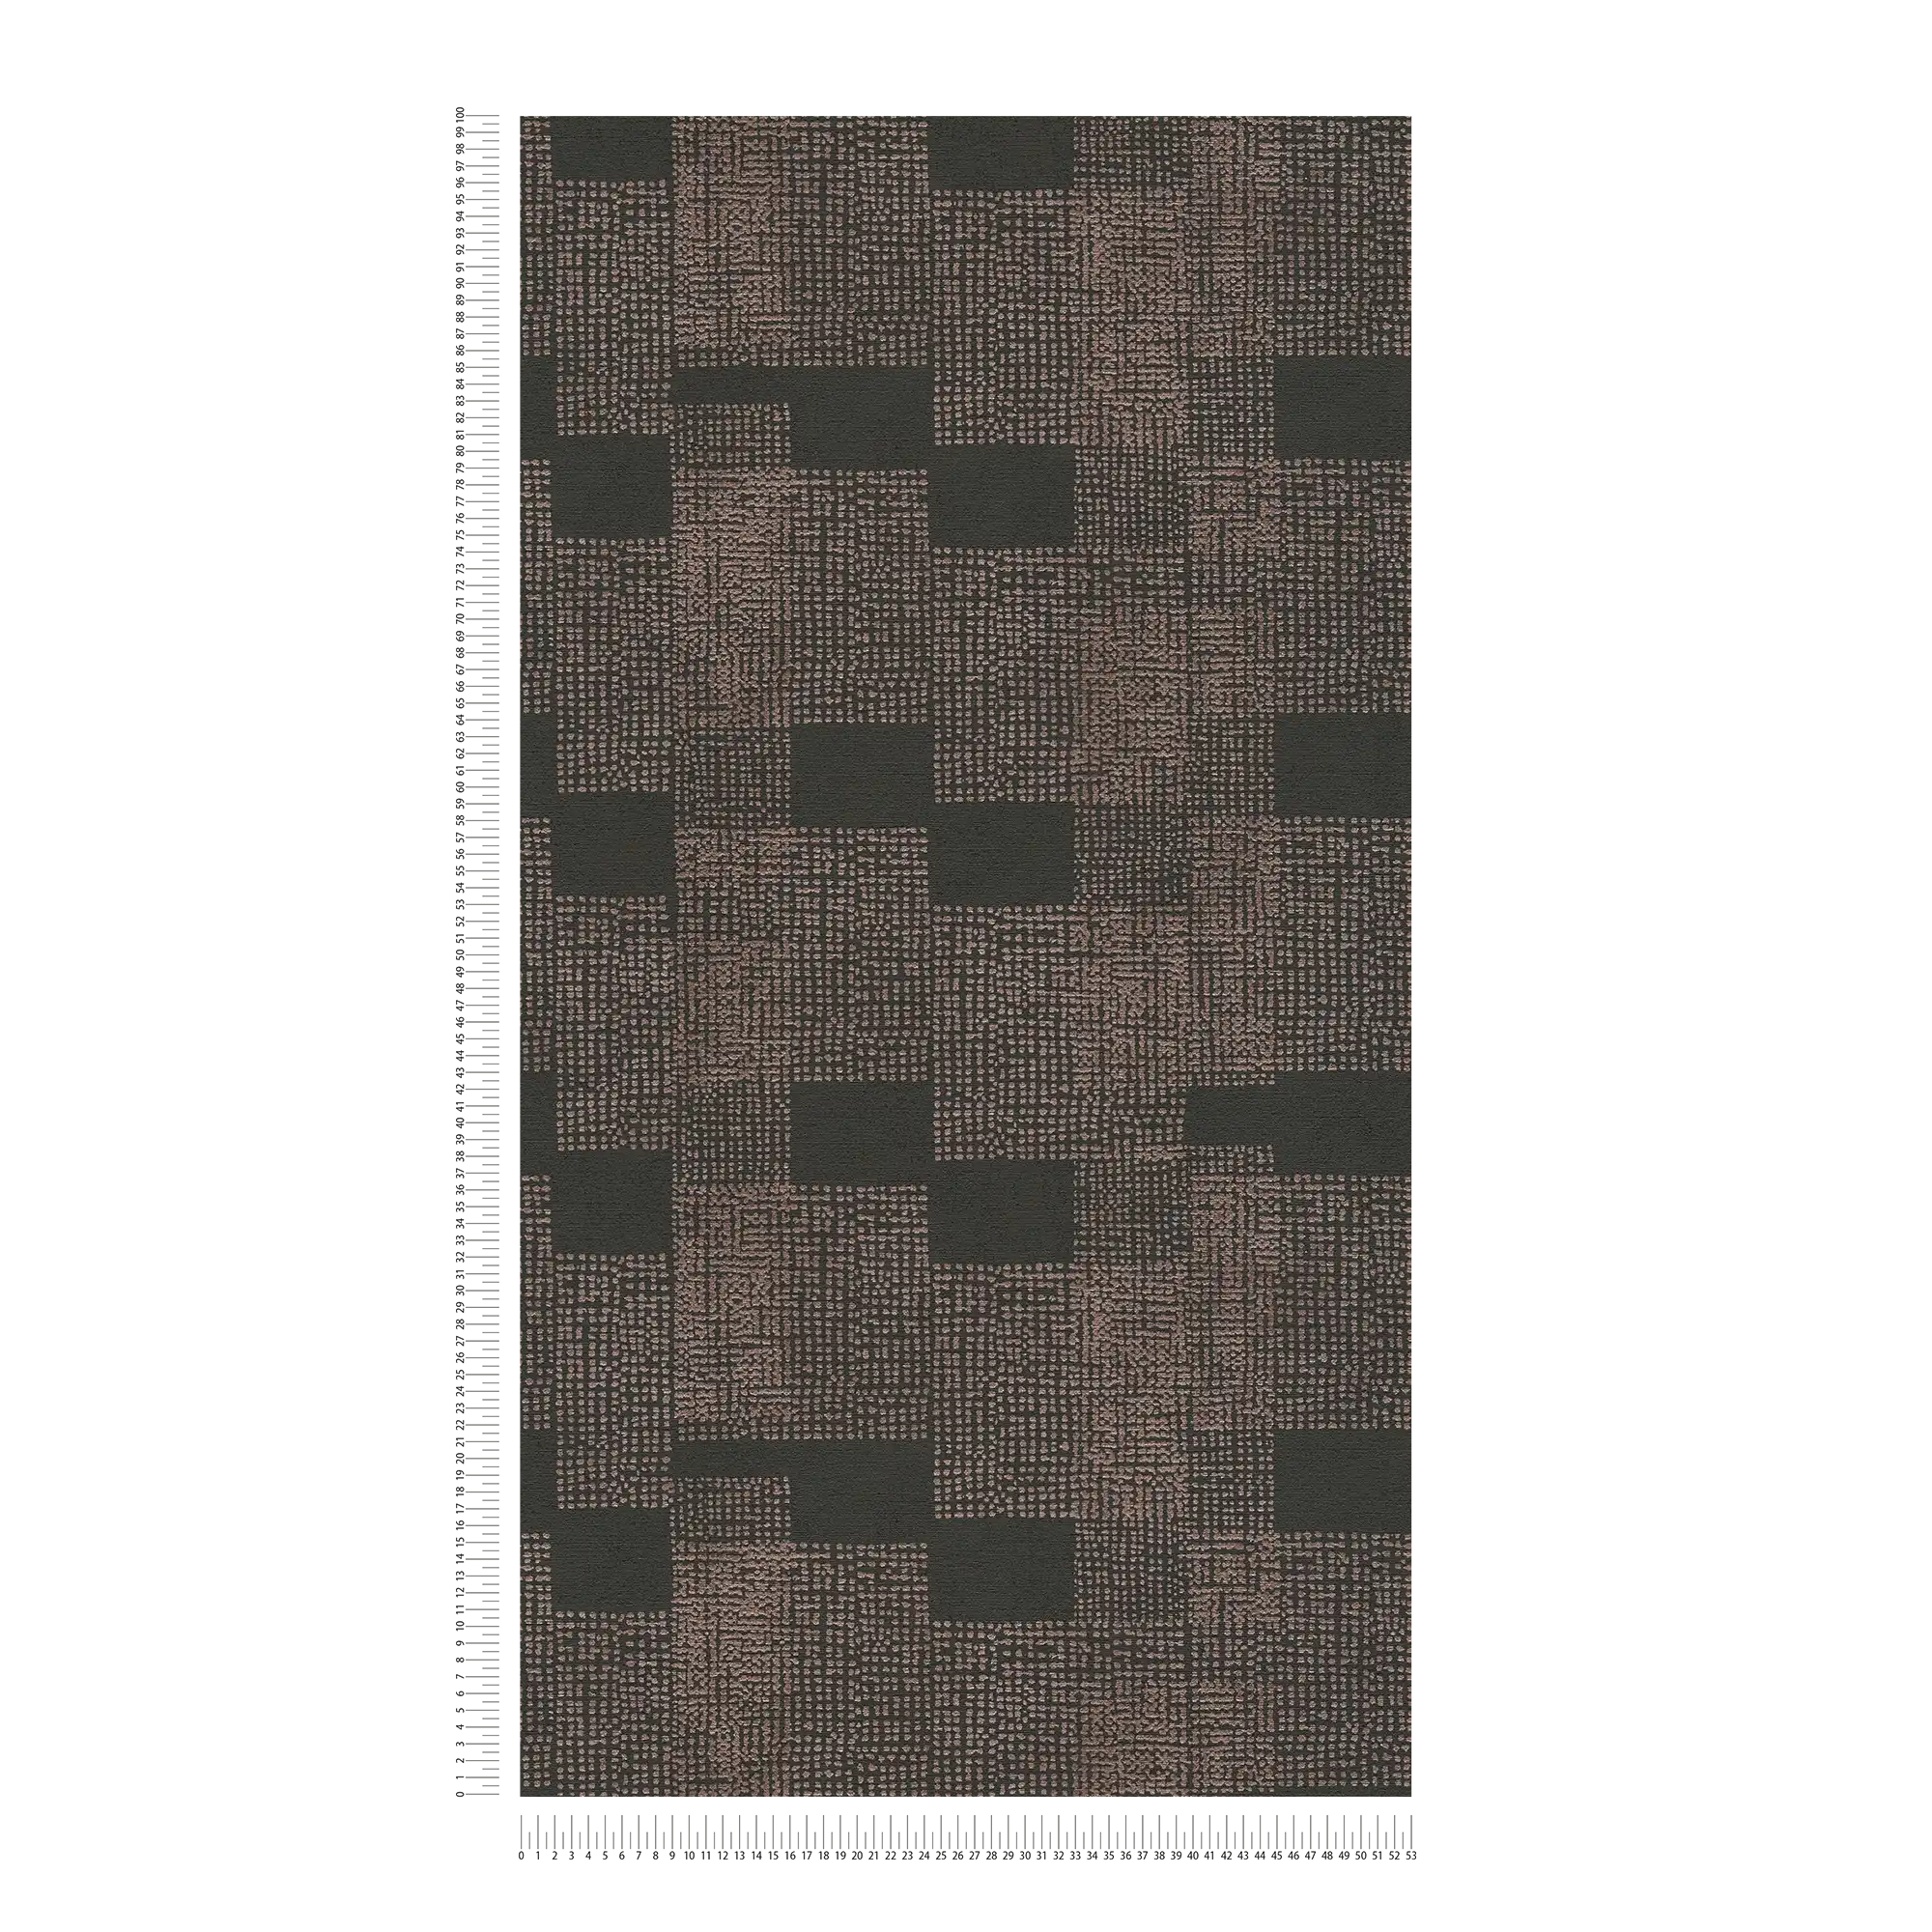             Geometric wallpaper ethnic design - black, metallic
        